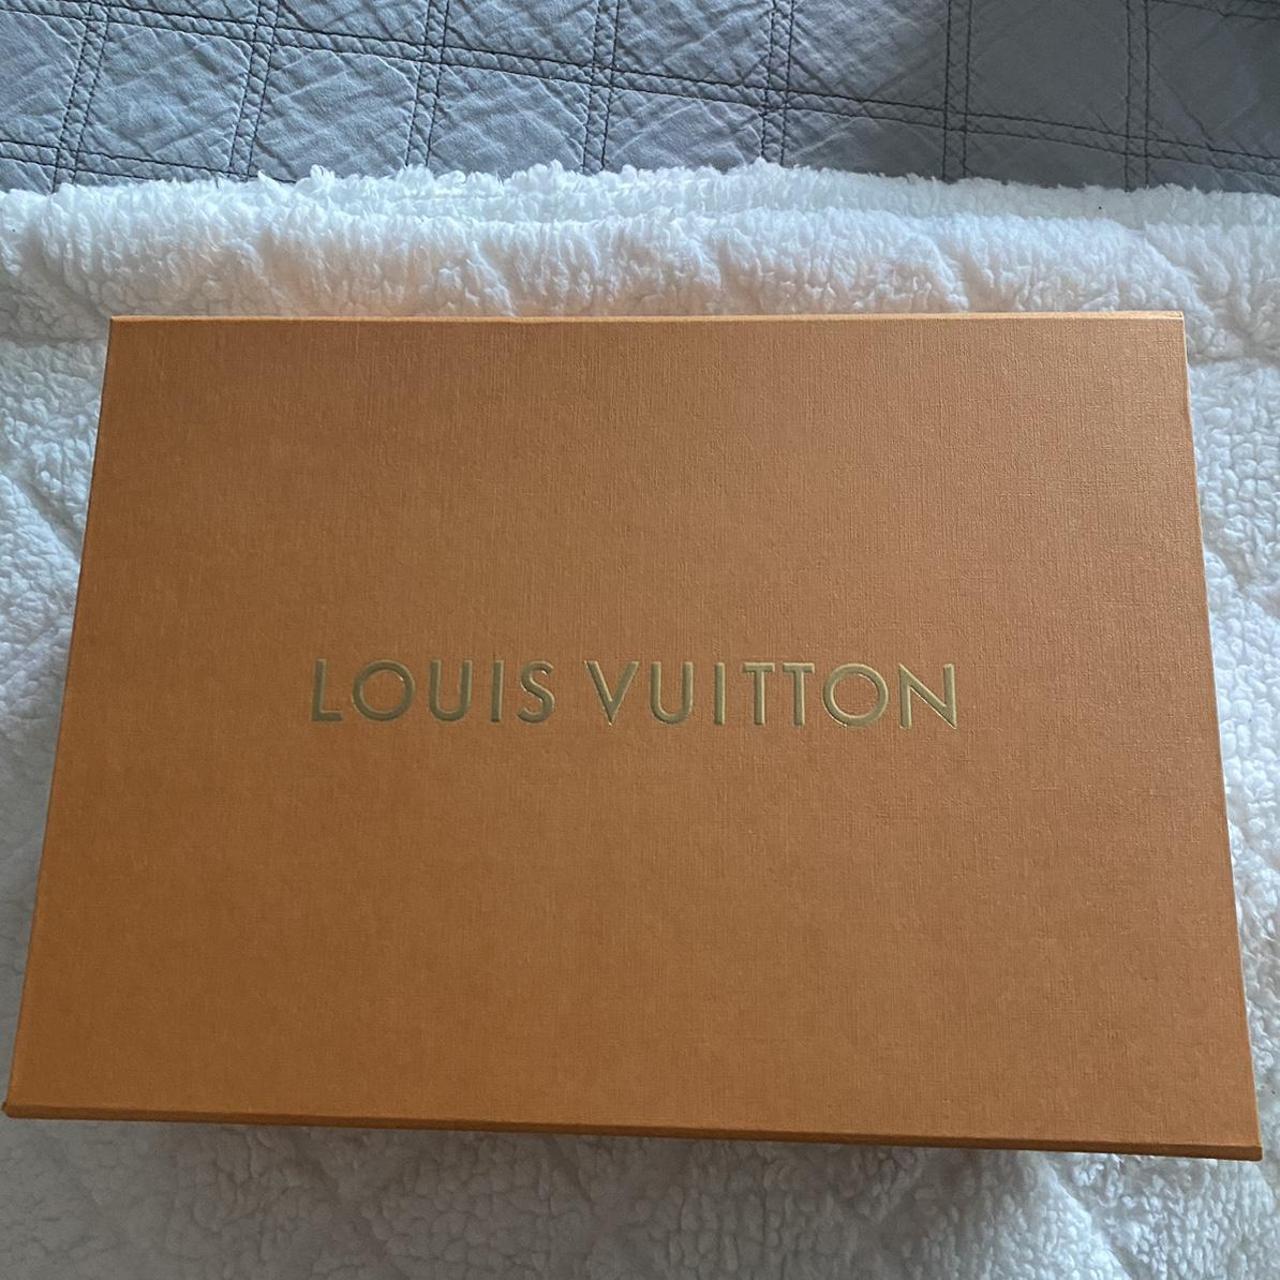 Empty Orange Louis Vuitton Gift Box